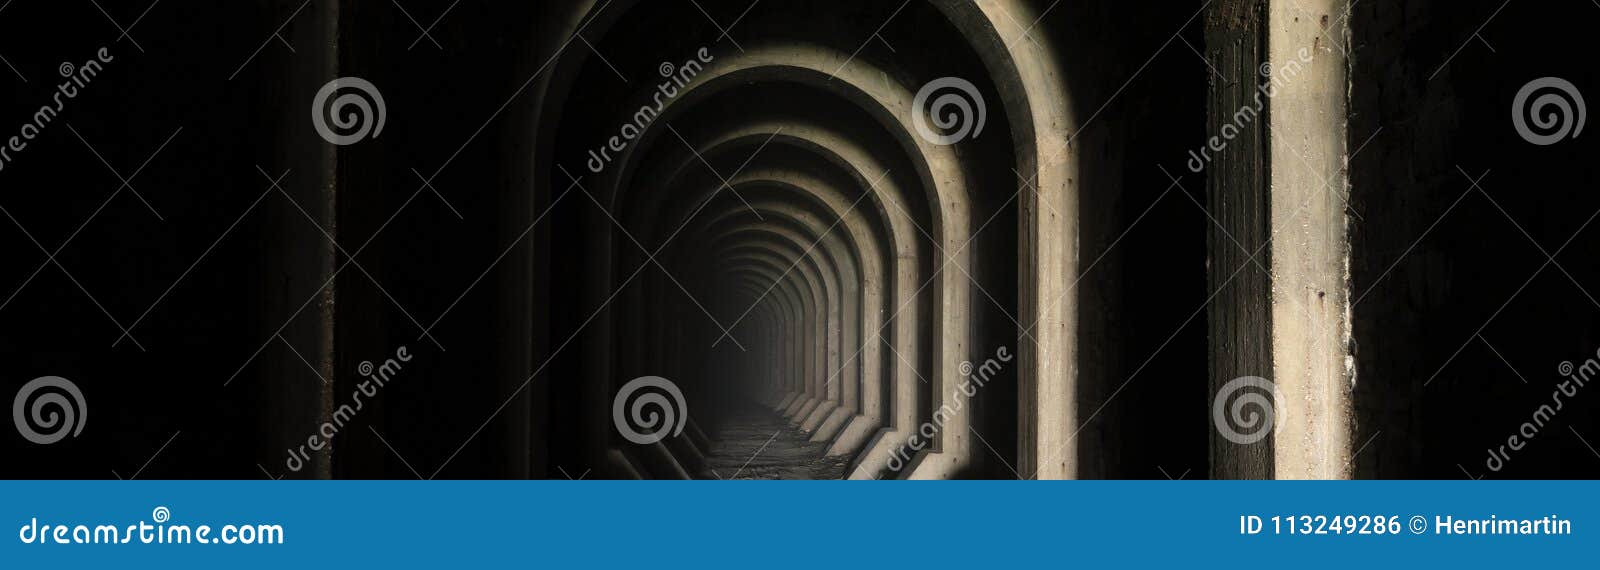 old tavannes tunnel tunnel de tavannes in the verdun region